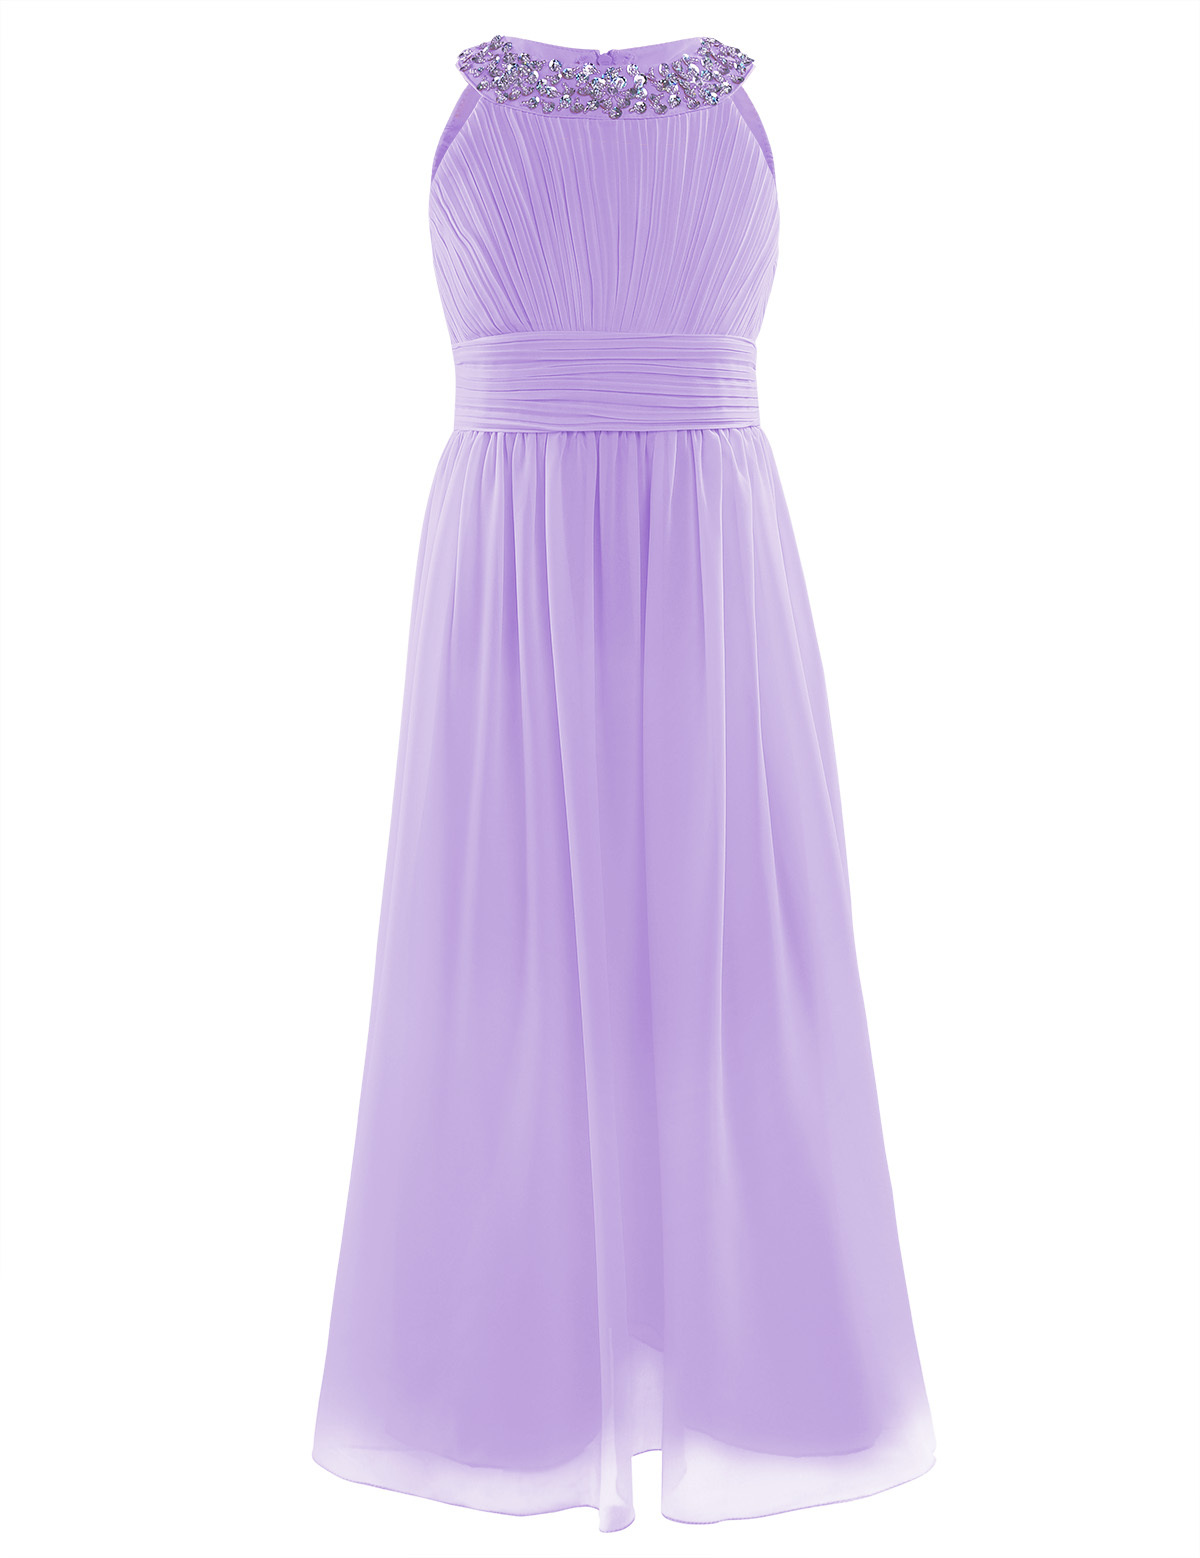 inhzoy Girls Sequins Chiffon Wedding Bridesmaid Dress Lavender 14 ...